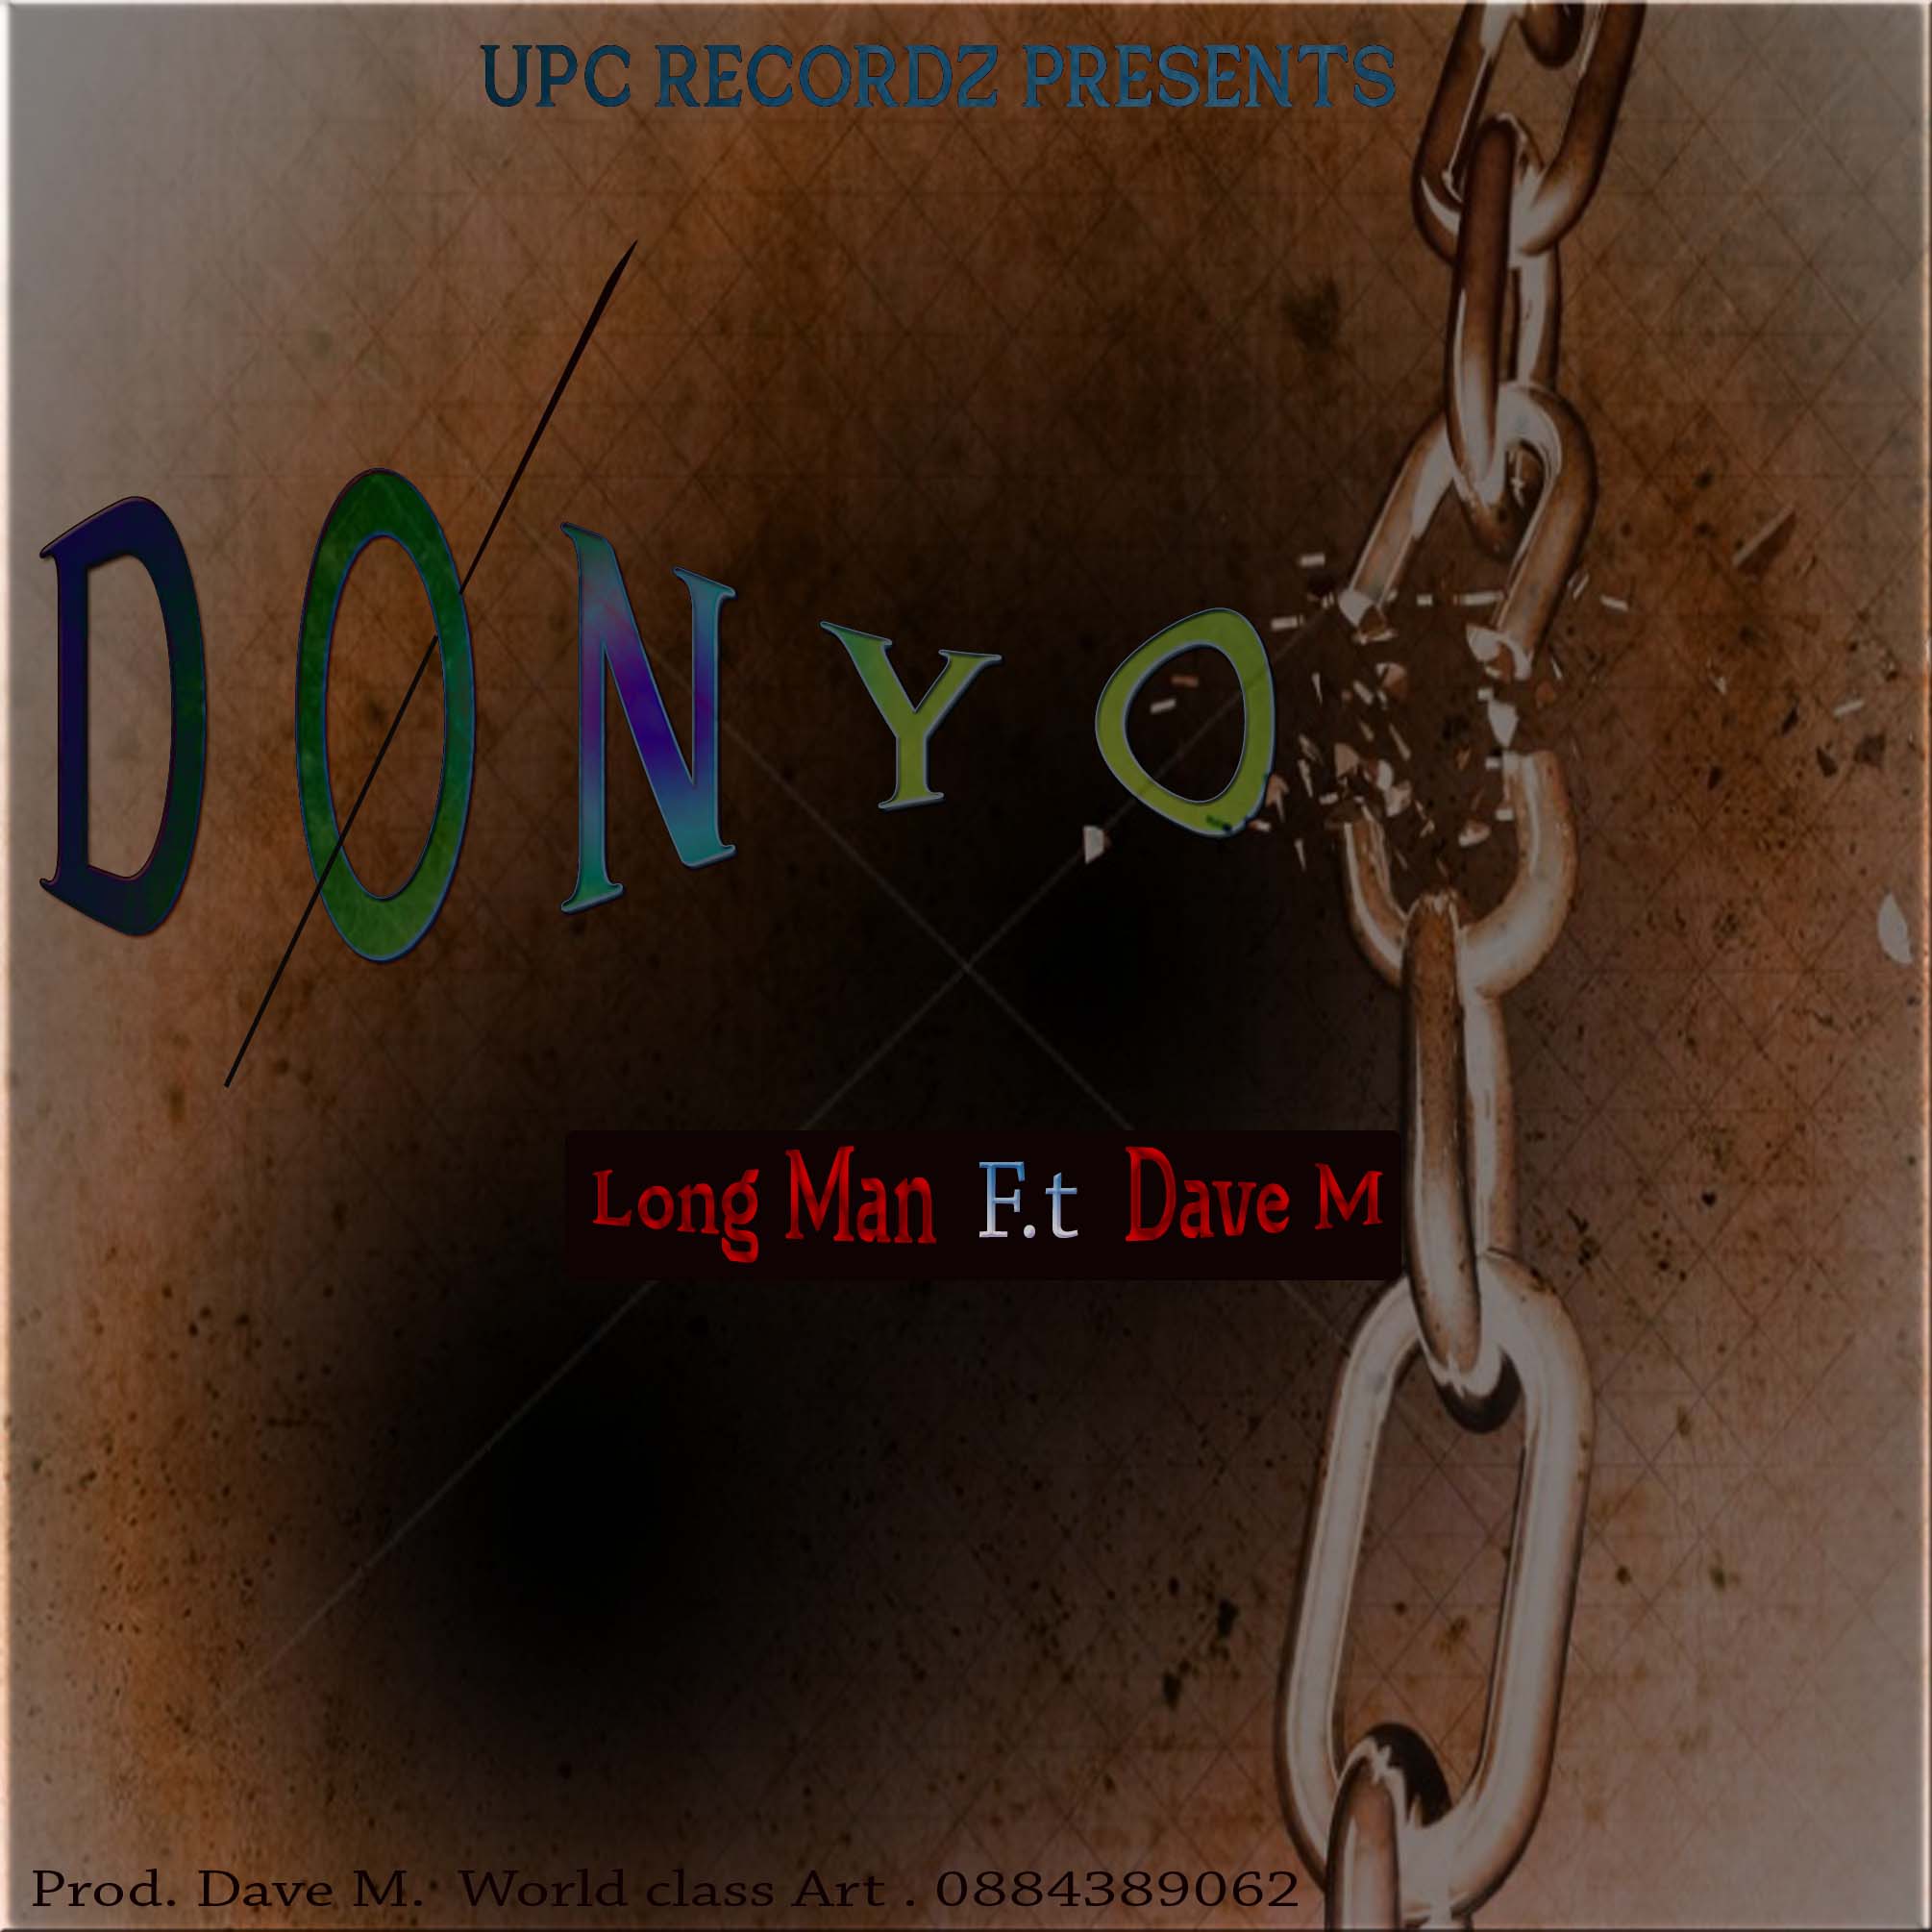 Long-Man-Ft-Dave-M-Donyo-Prod-By-Dave-M-UPC-Recordz